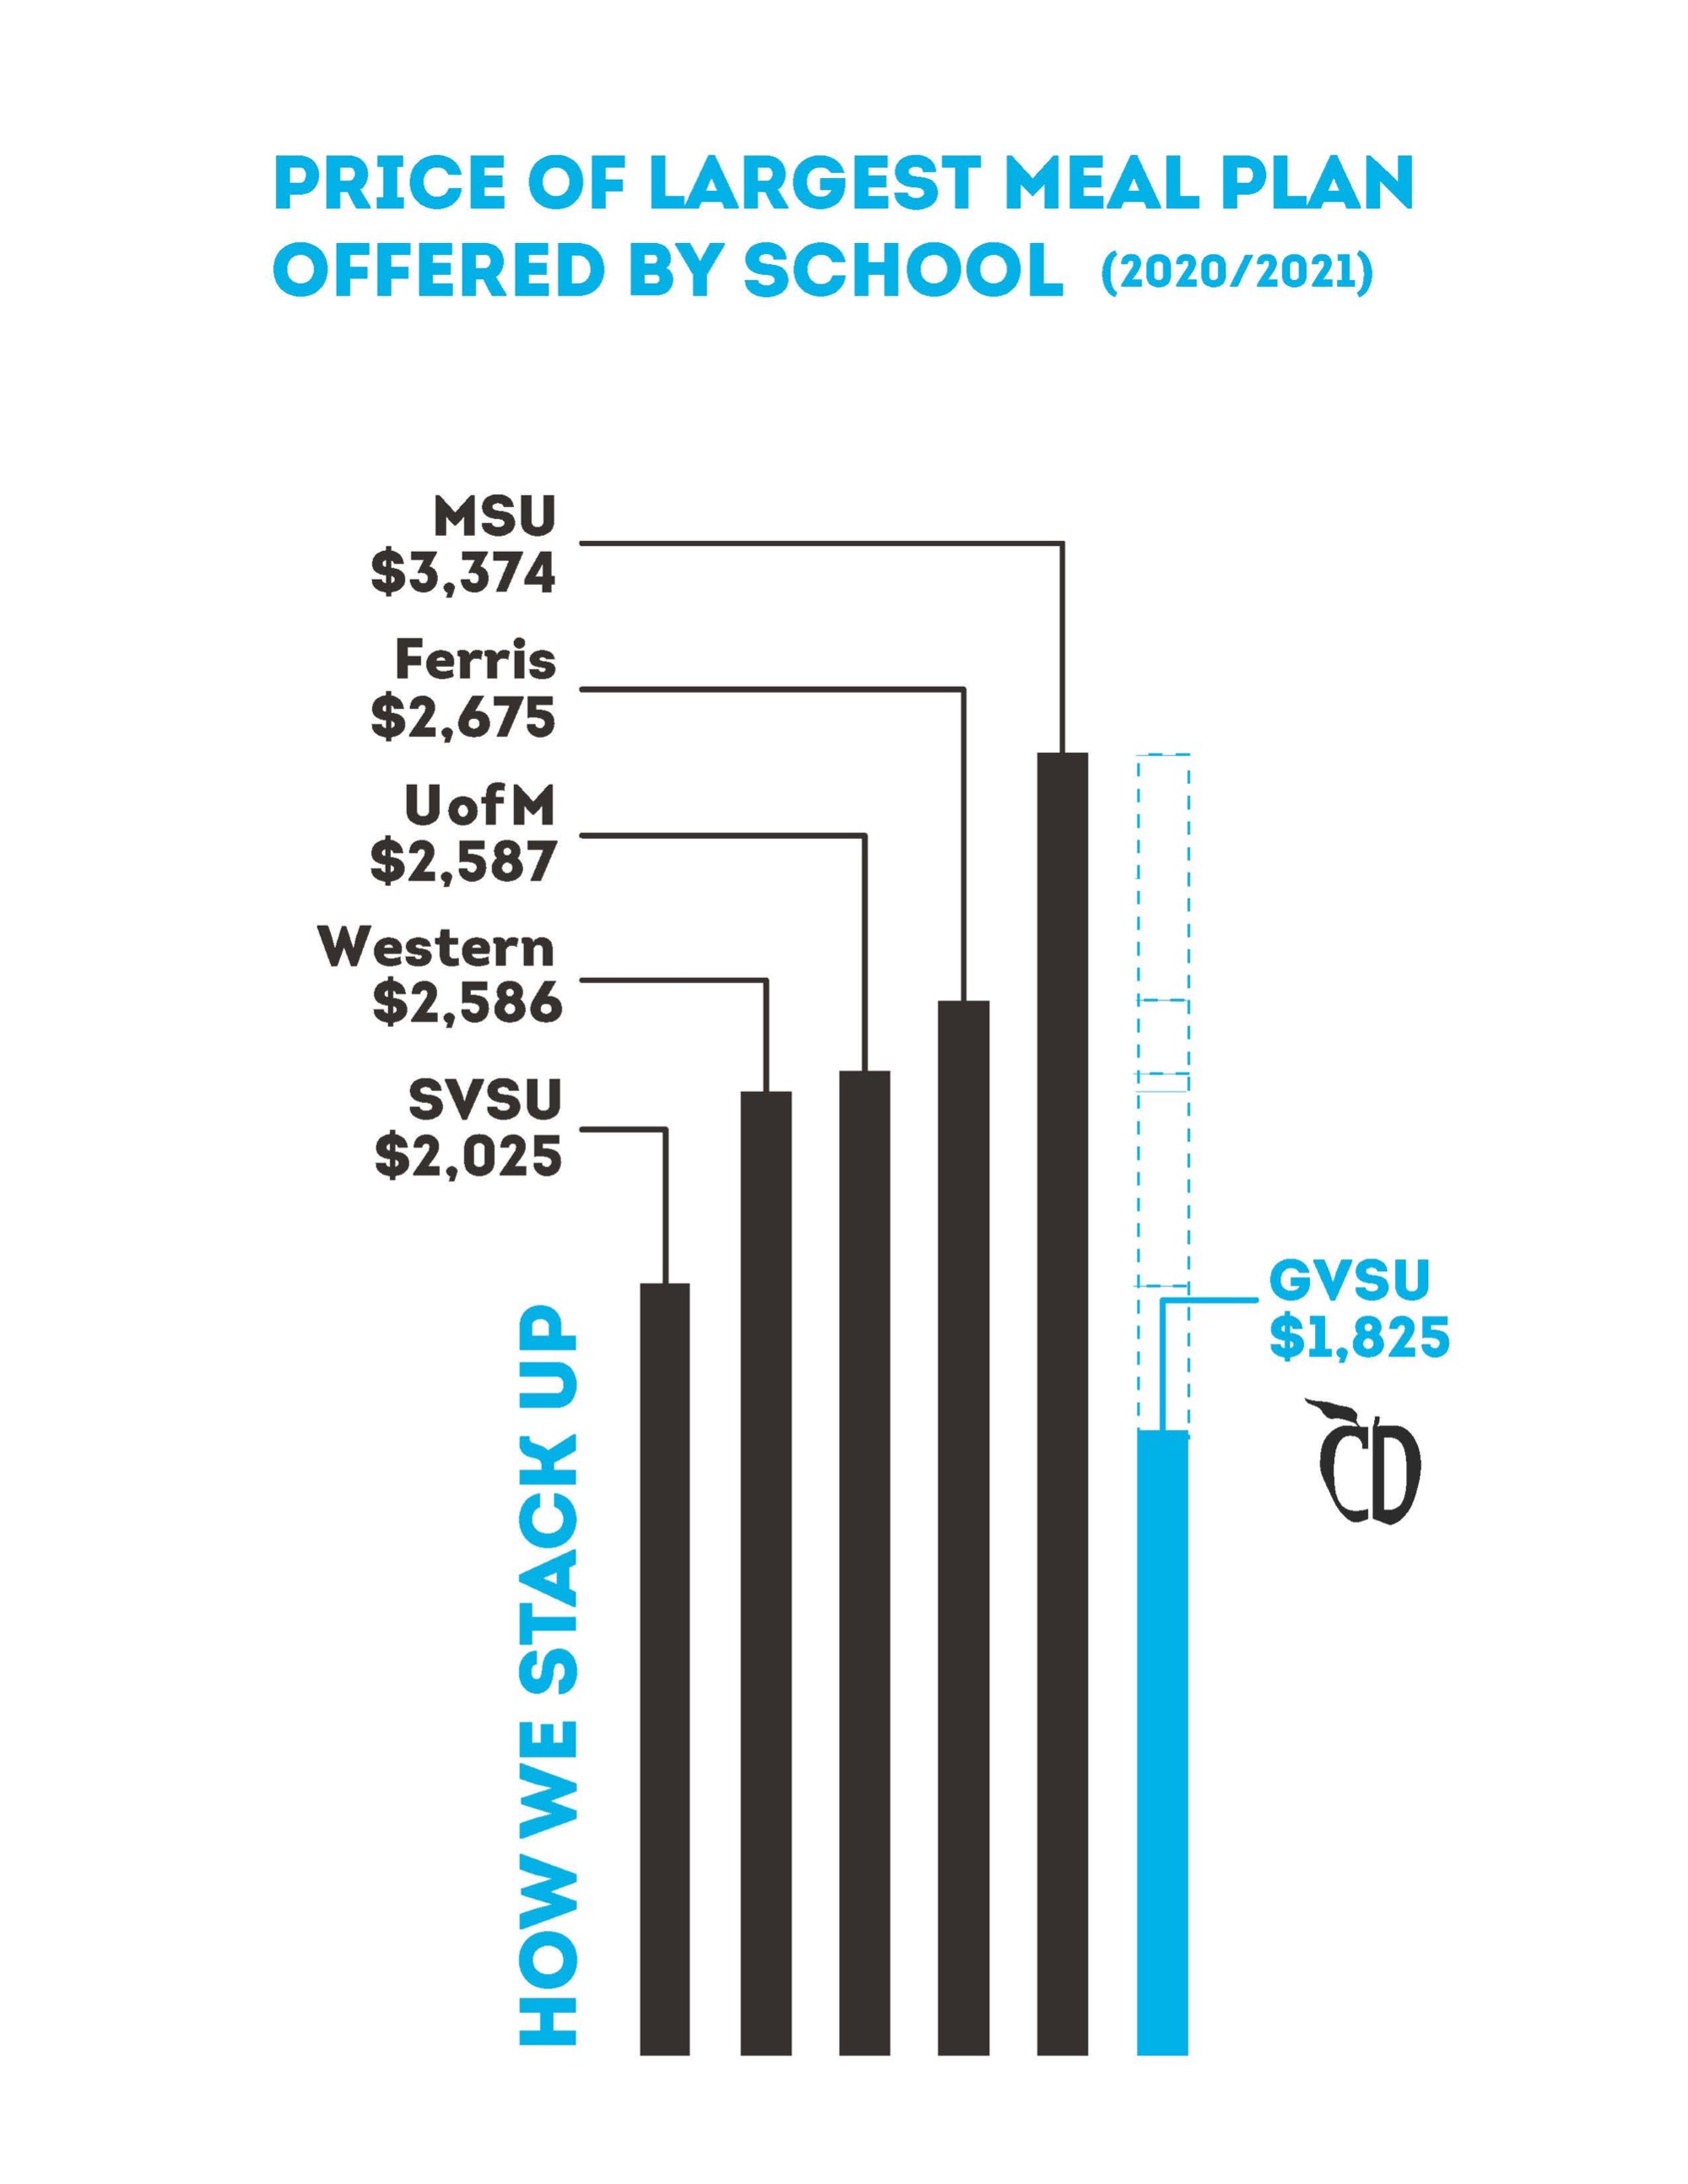 Price of largest meal plan offered by school 2020/2021, How we stack up: GVSU: $1,825, SVSU: $2,025, Western: $2,586, U of M: $2,587, Ferris: $2,675, MSU: $3,374